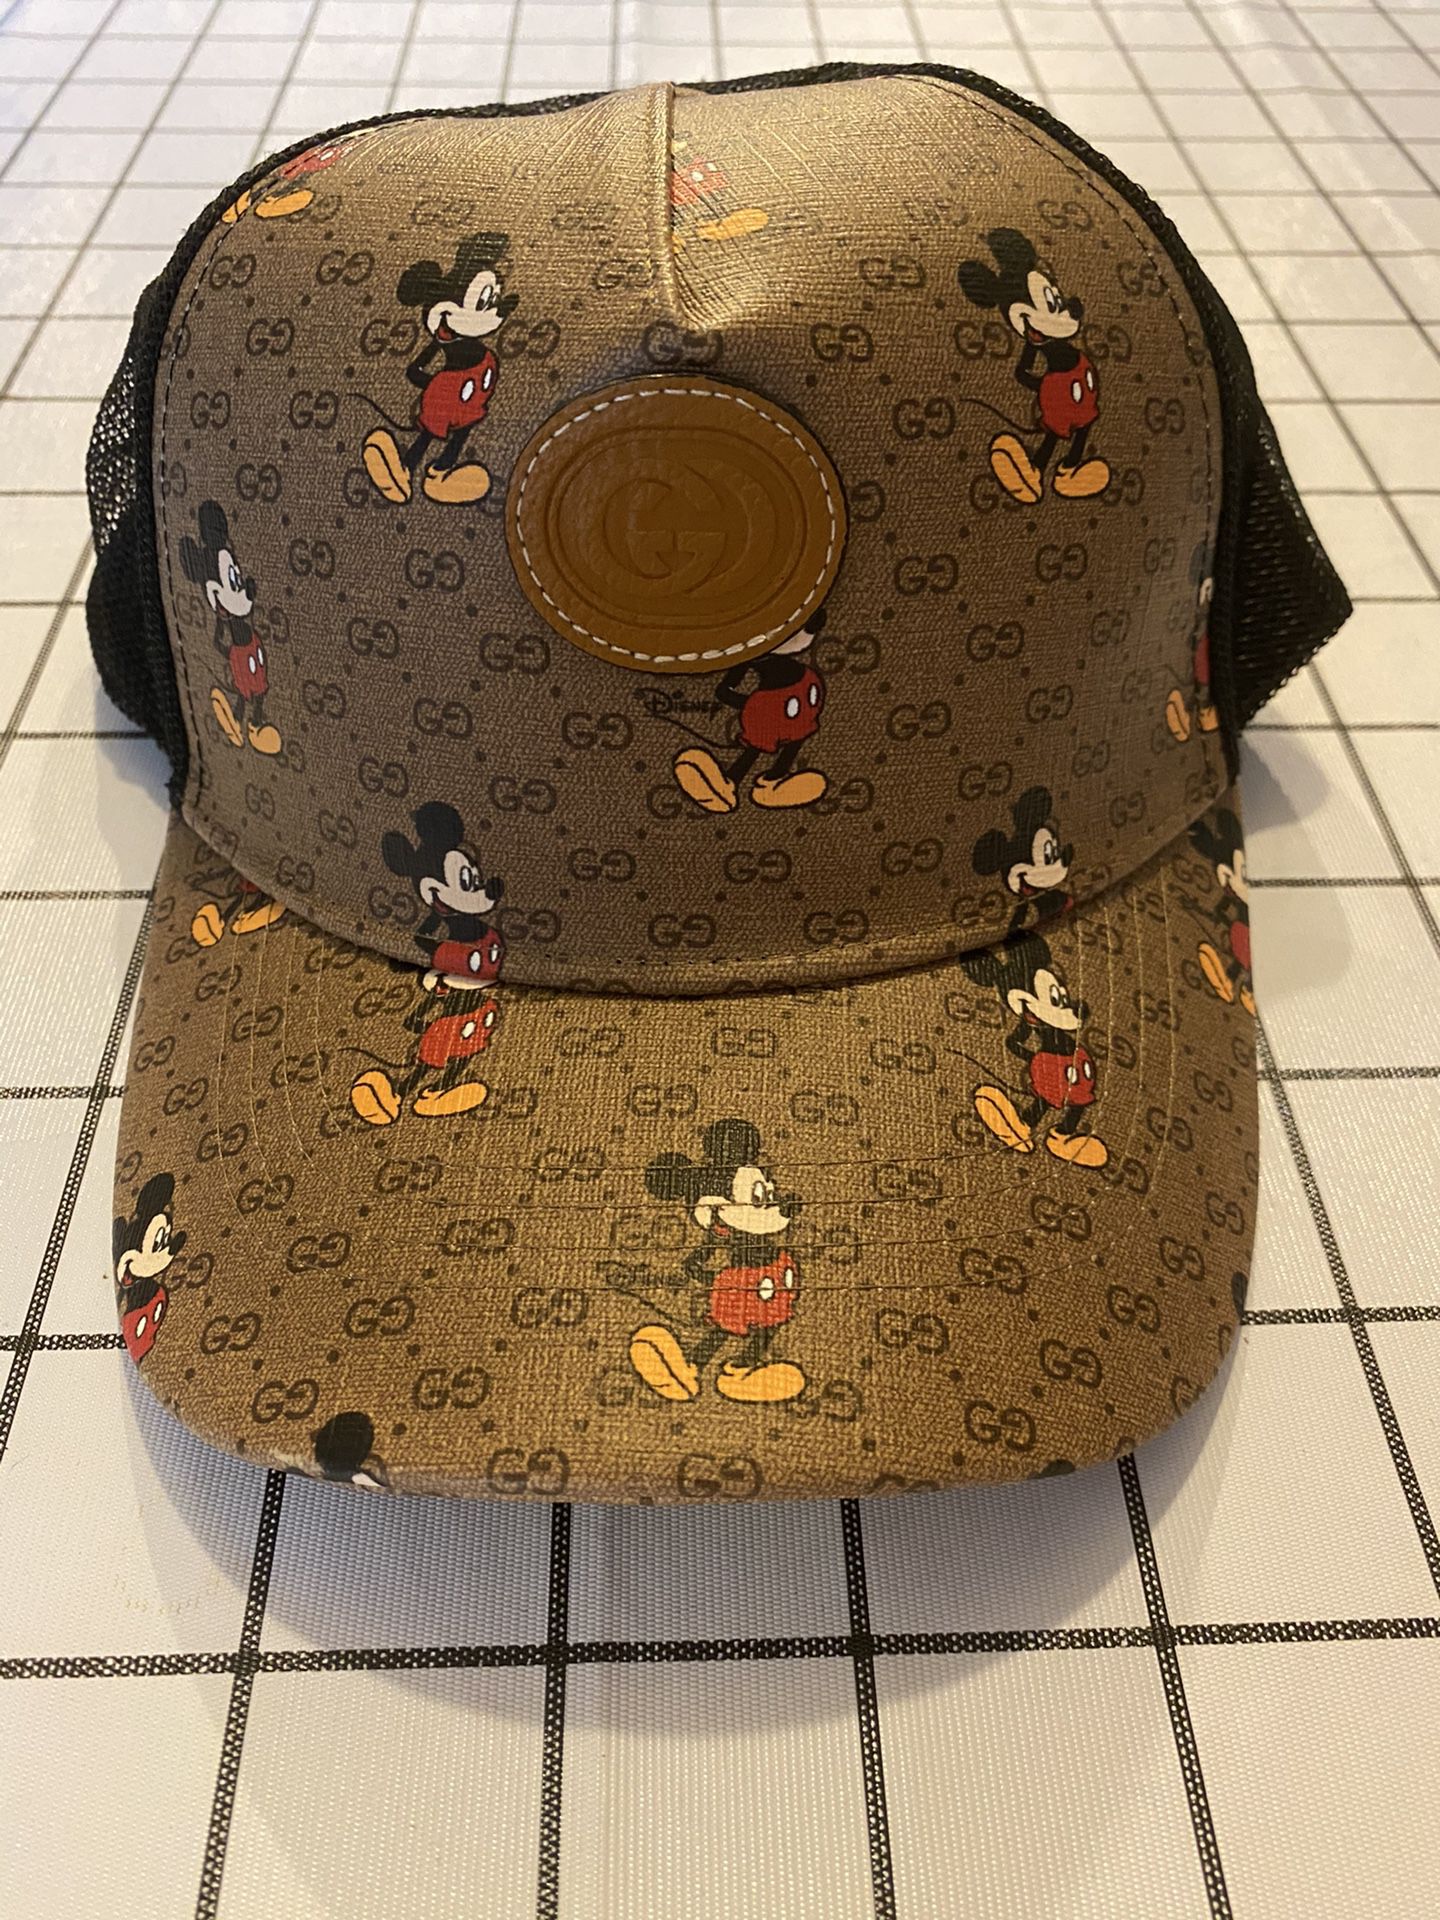 Gucci X Disney baseball hat